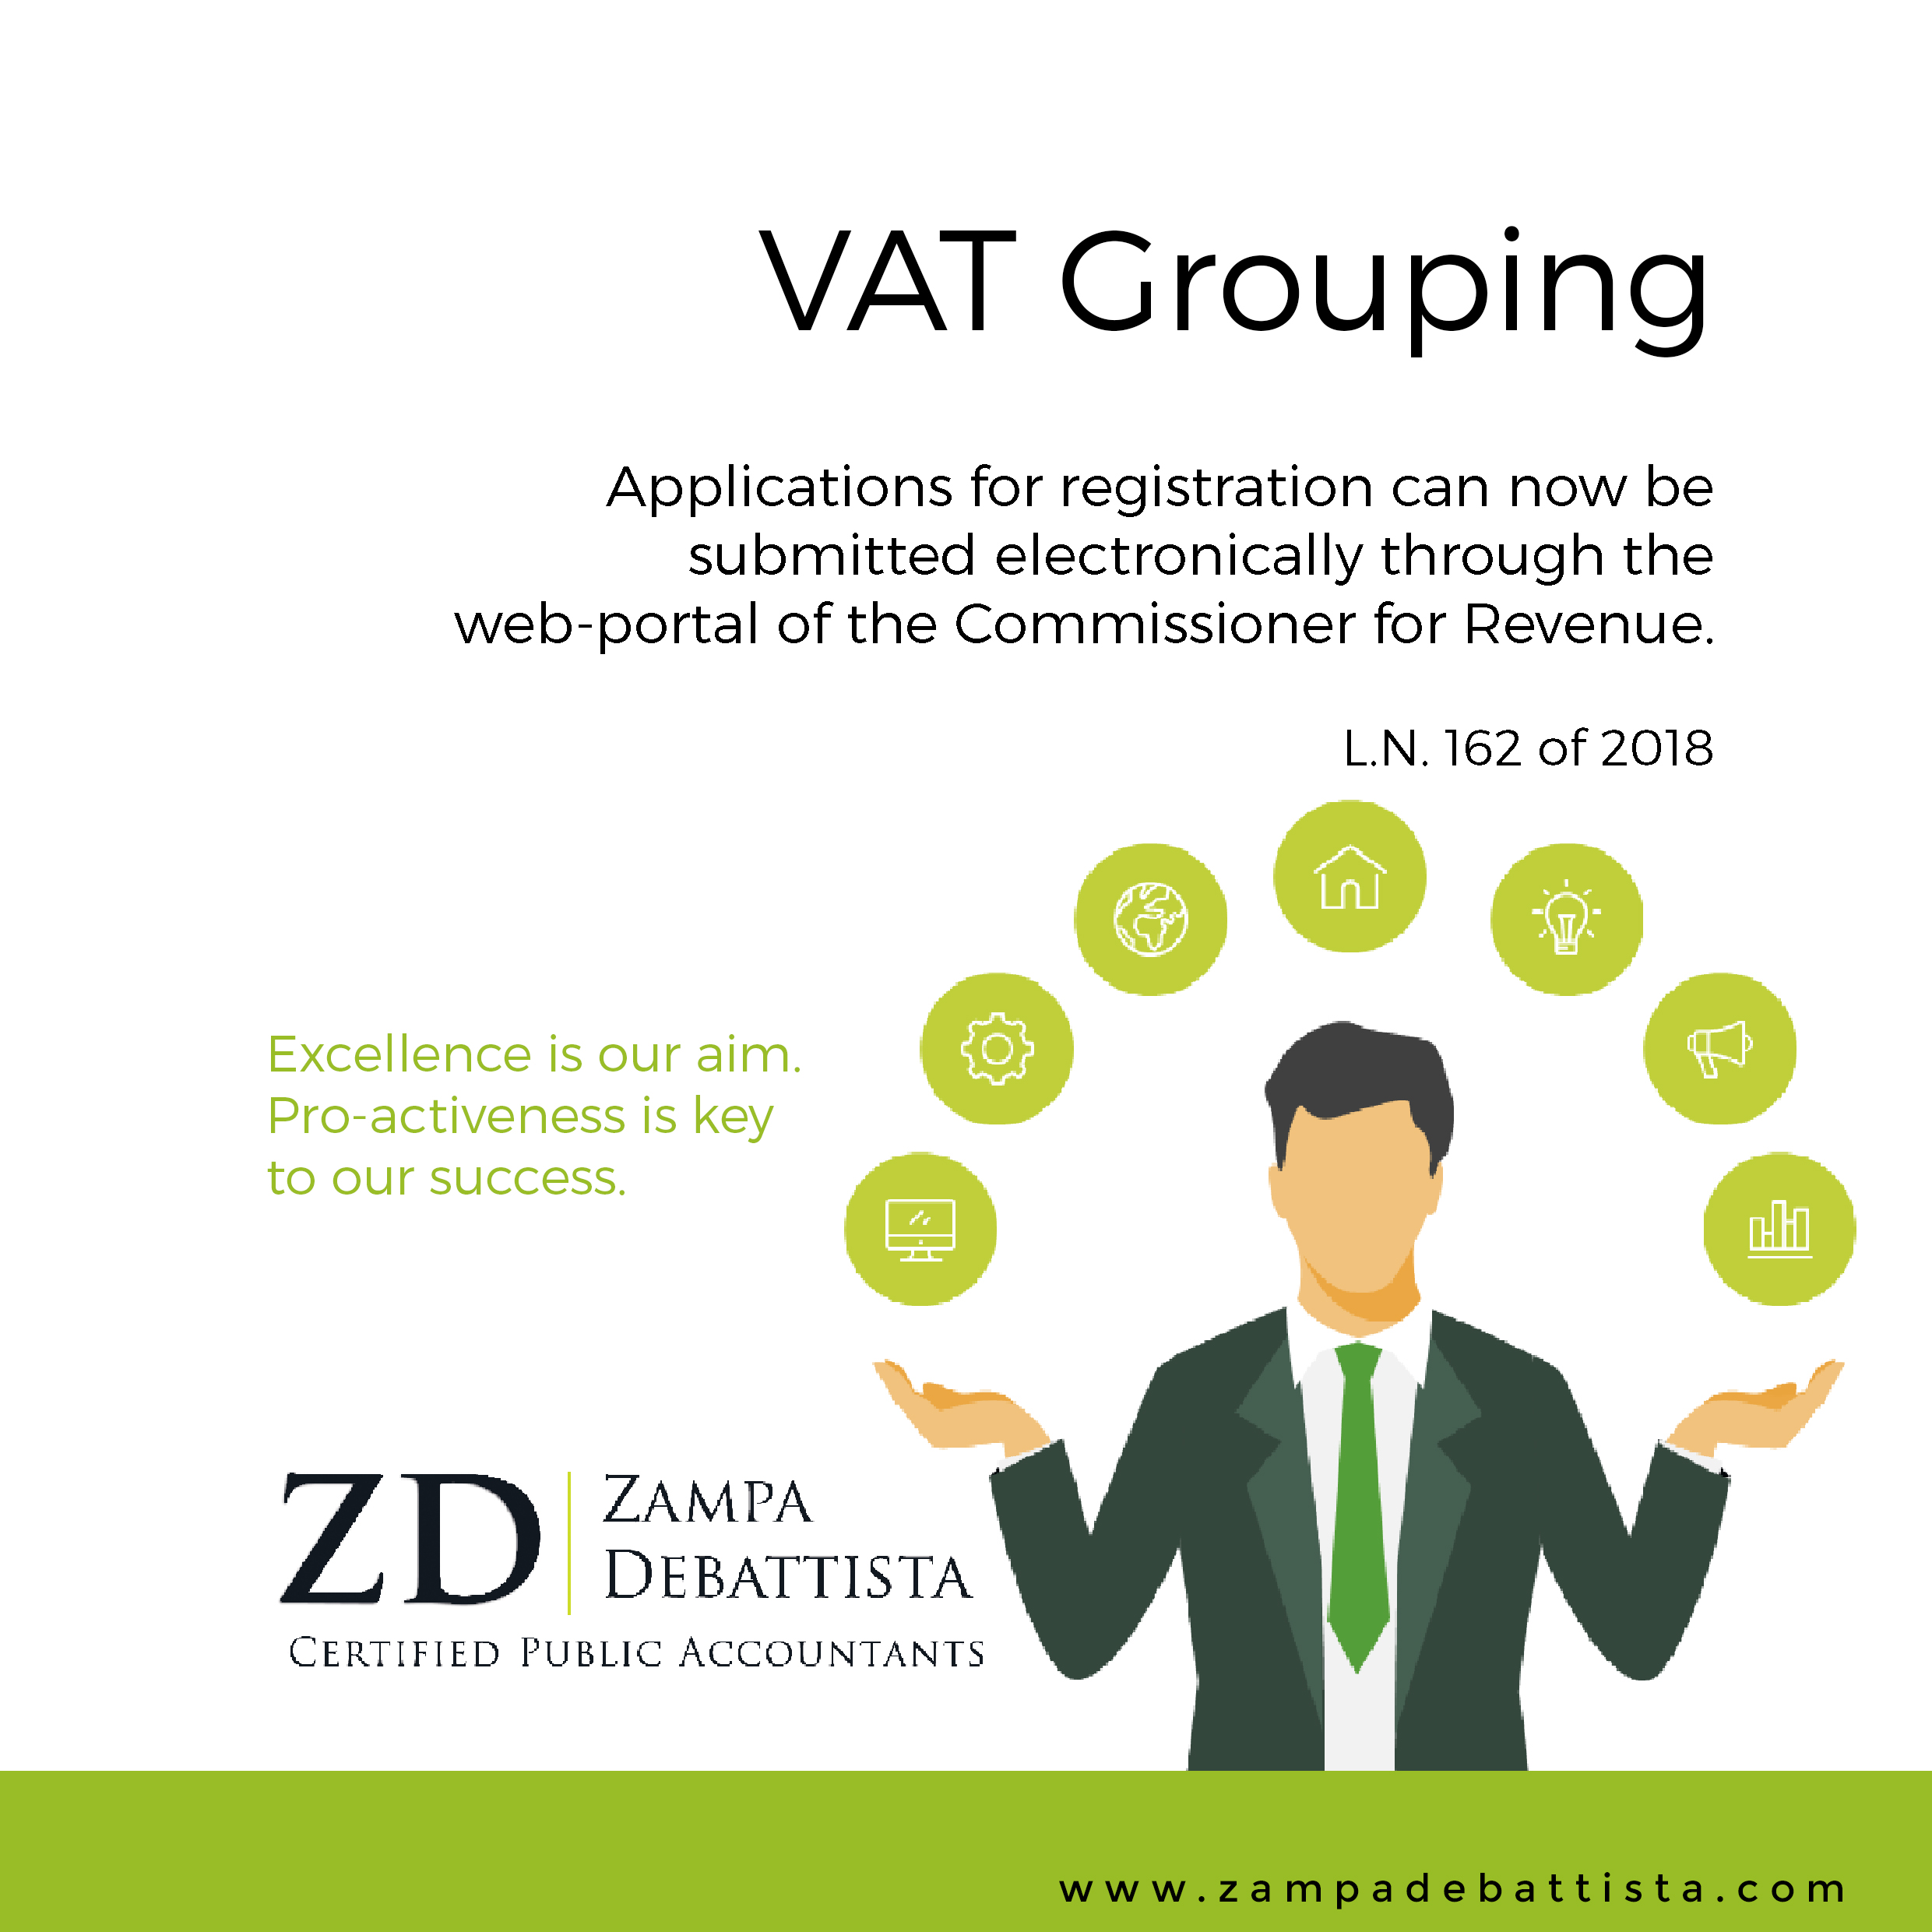 VAT Grouping in Malta – important update